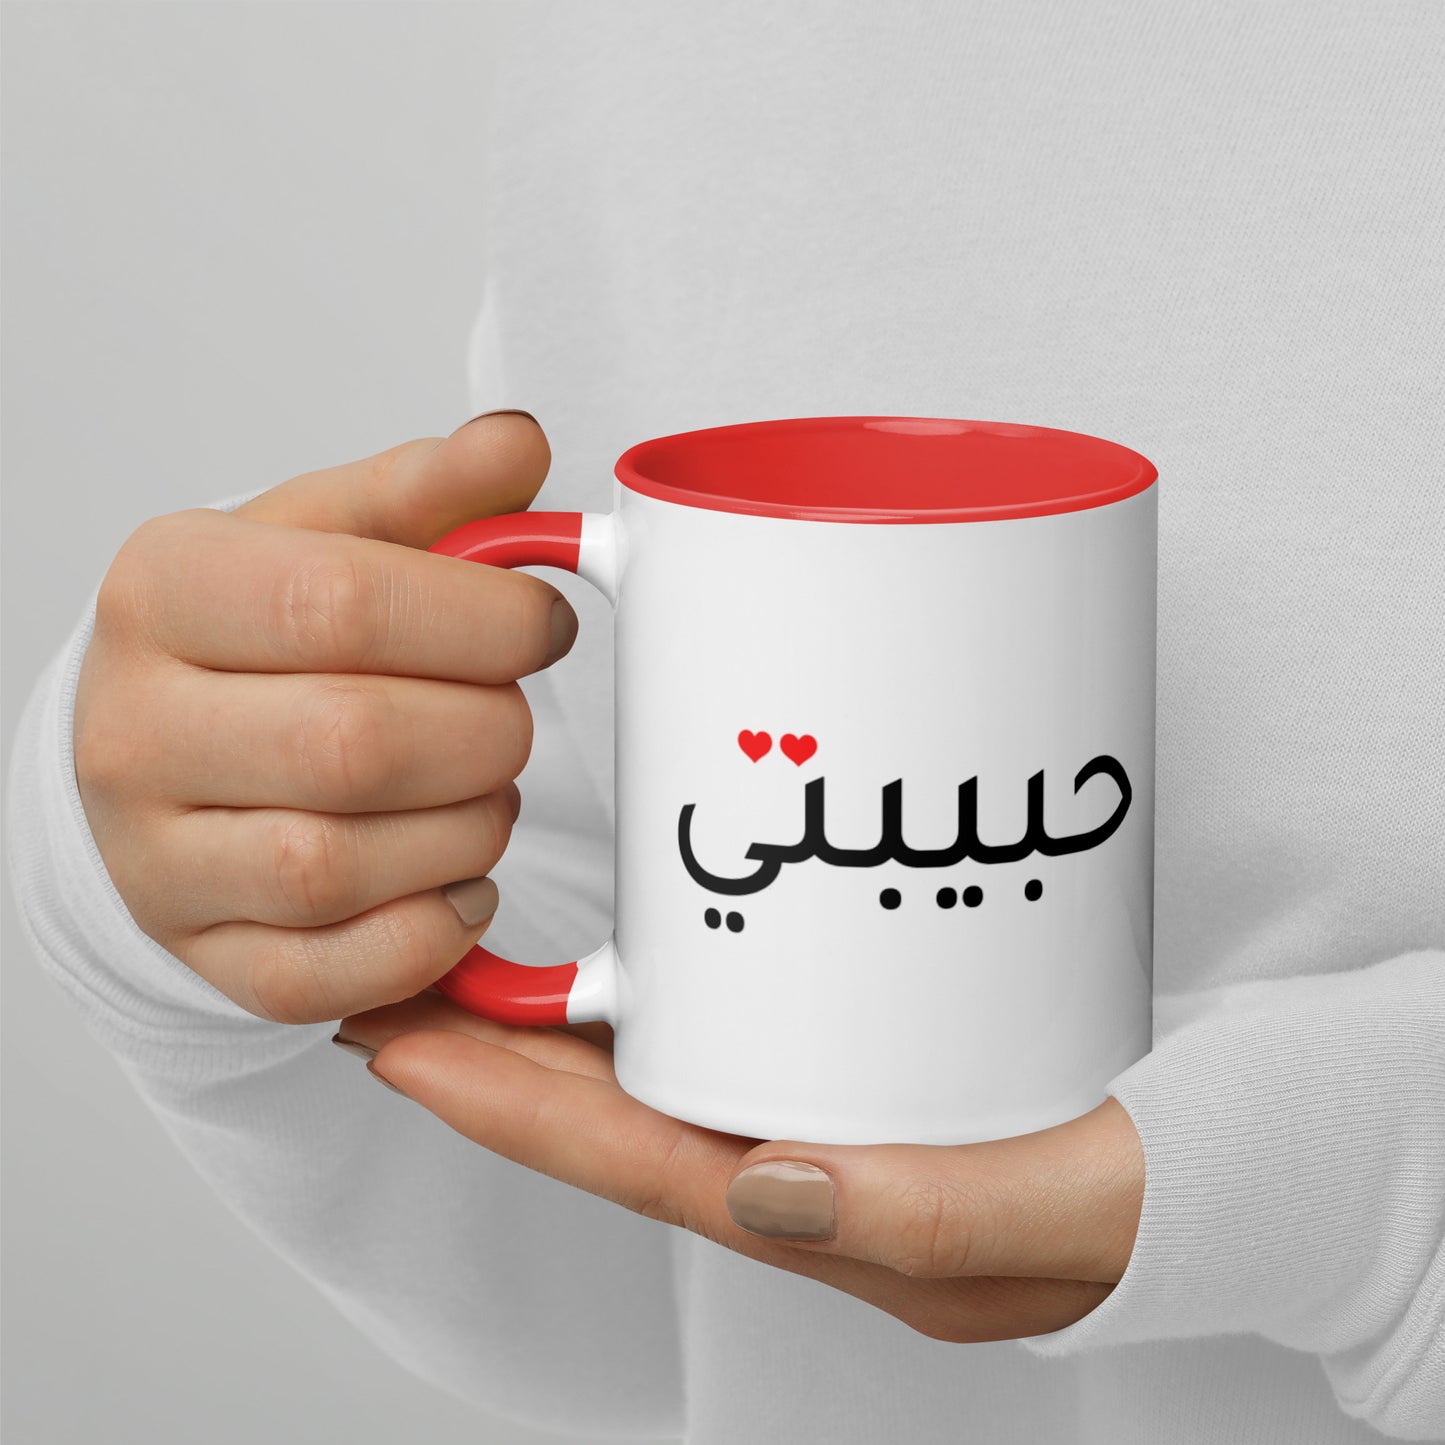 Habibty - Mug with Color Inside